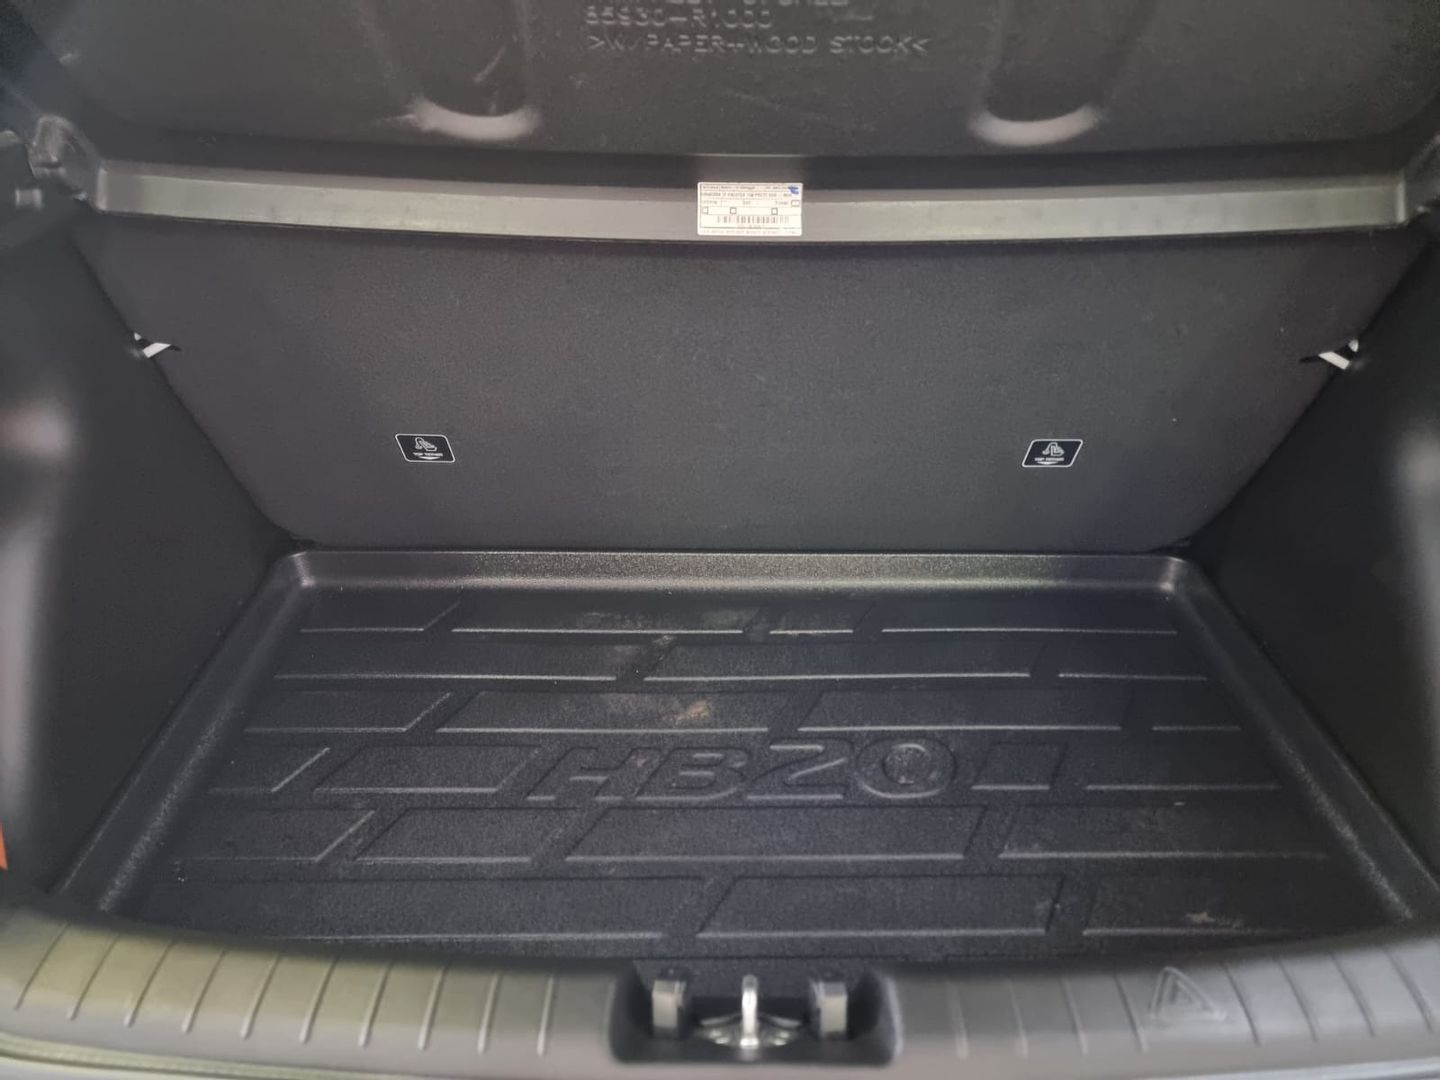 Hyundai HB20 Platinum 1.0 TB Flex 12V Aut.